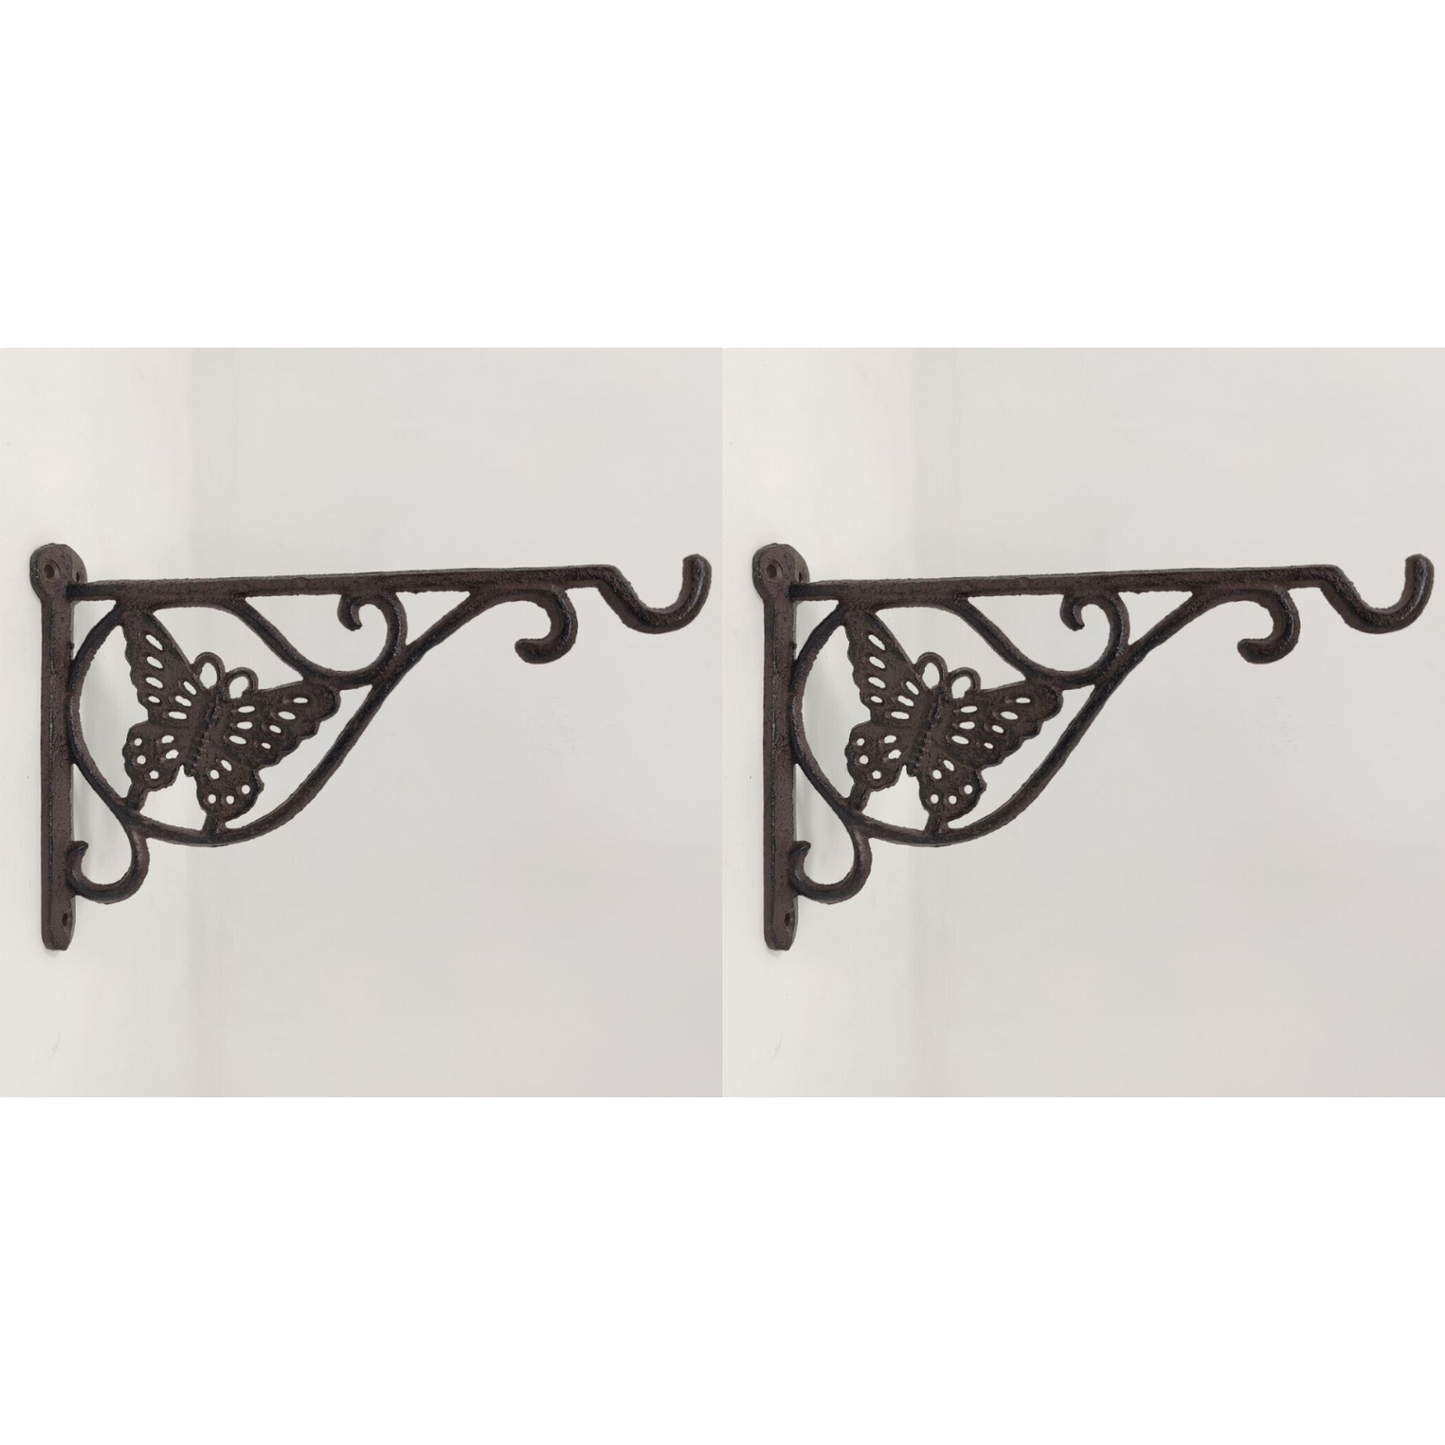 2Pc Butterfly Cast Iron Shelf Bracket Antique look, Shelving Wall Mount Decor